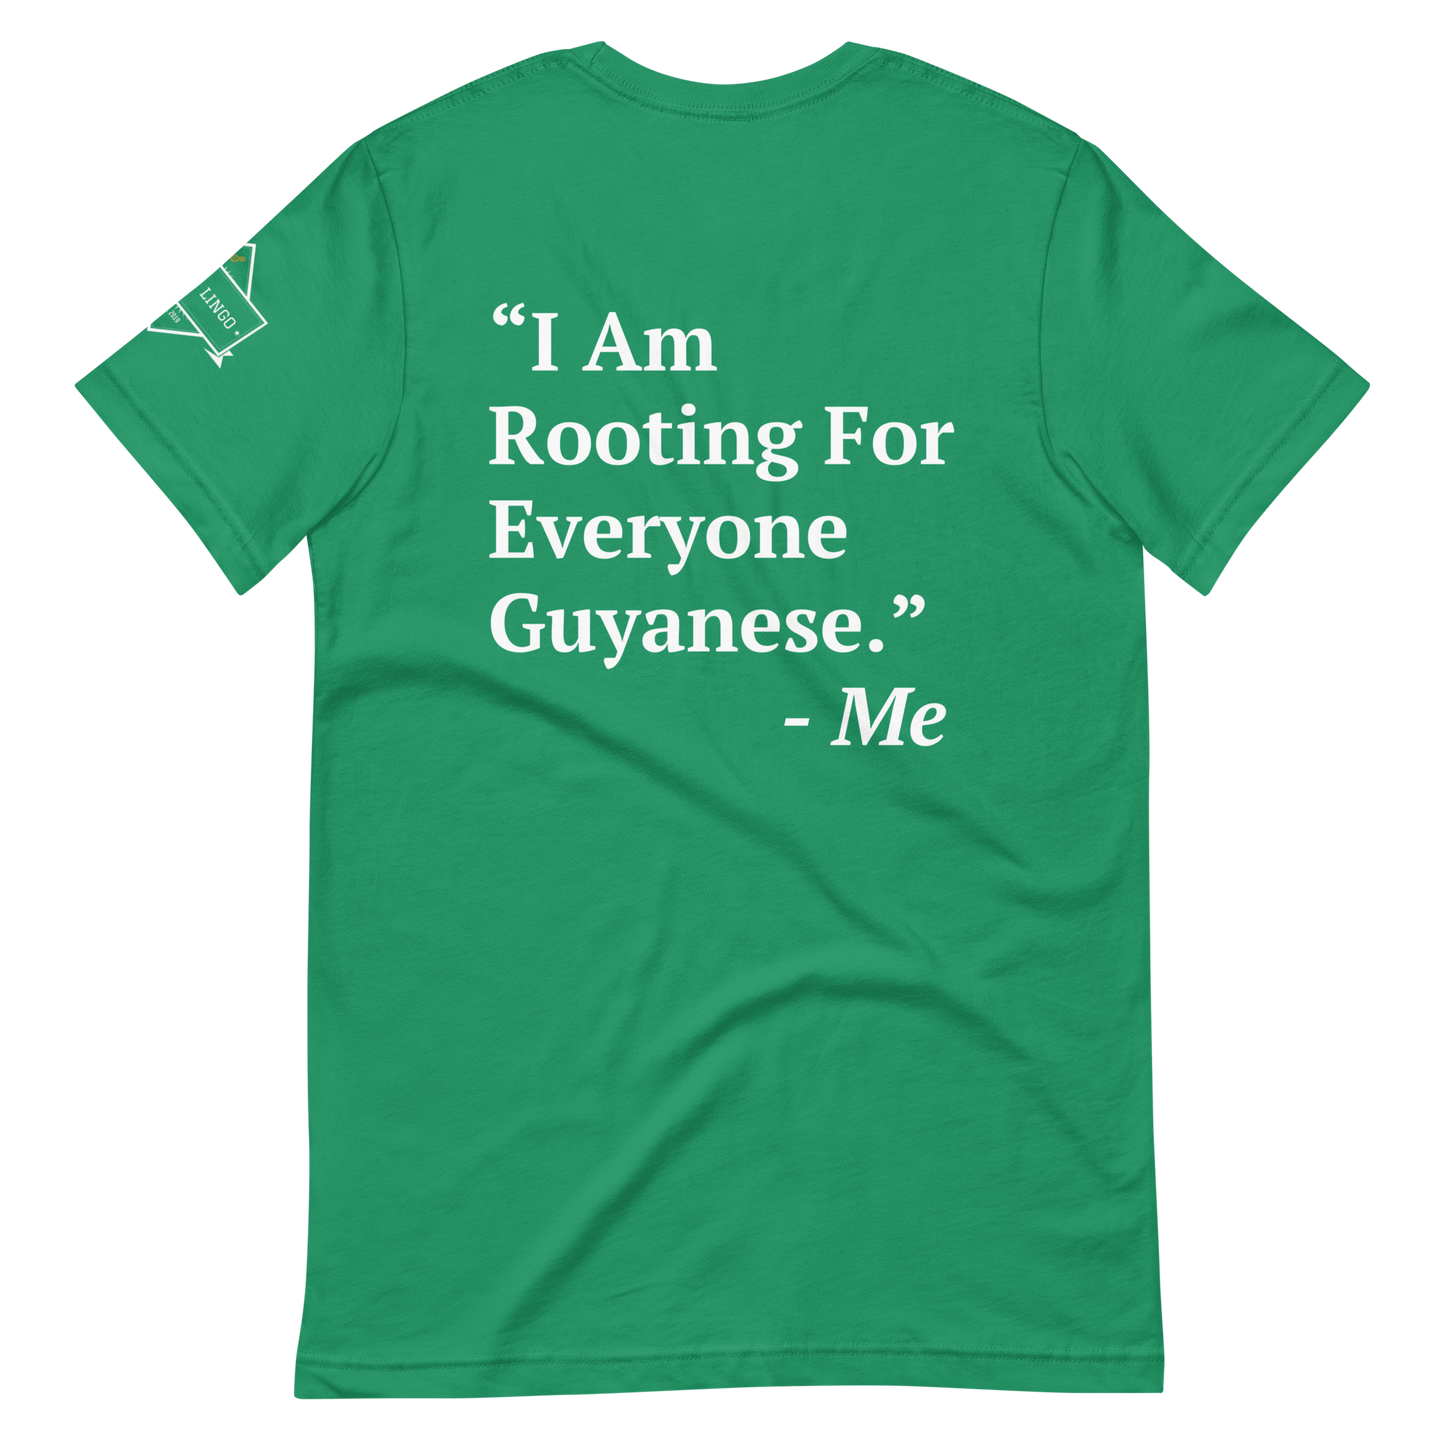 Guyana Shield Unisex t-shirt